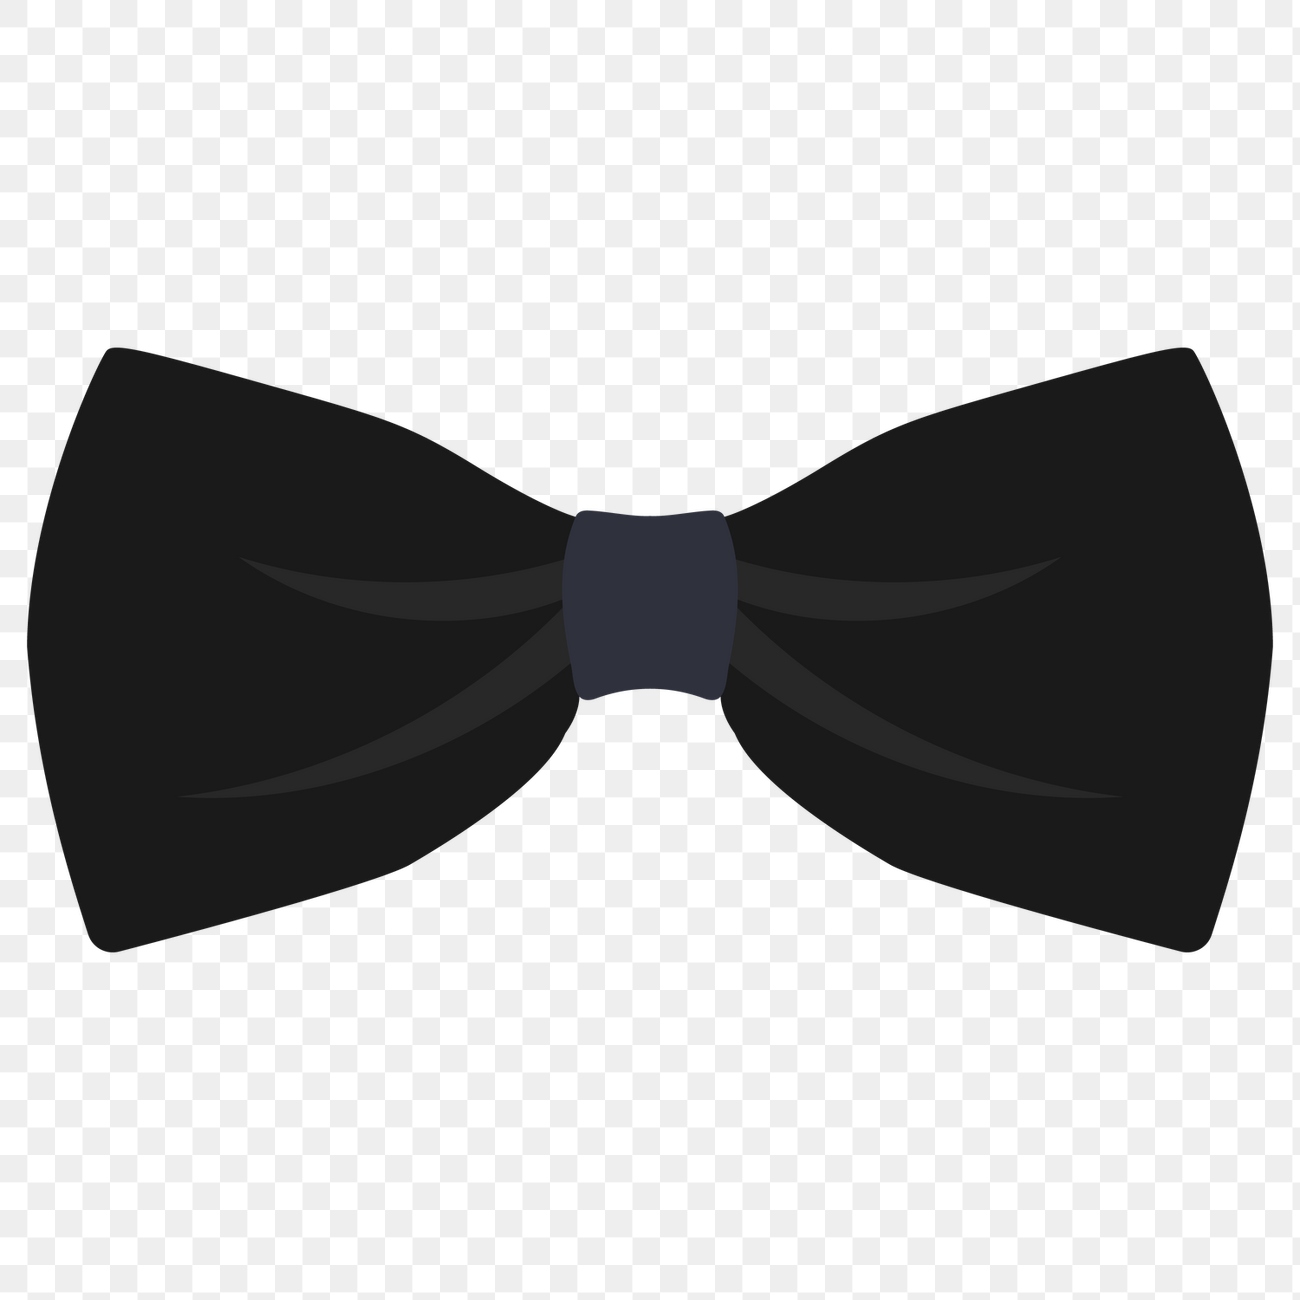 Black bow tie design element | Premium PNG Sticker - rawpixel